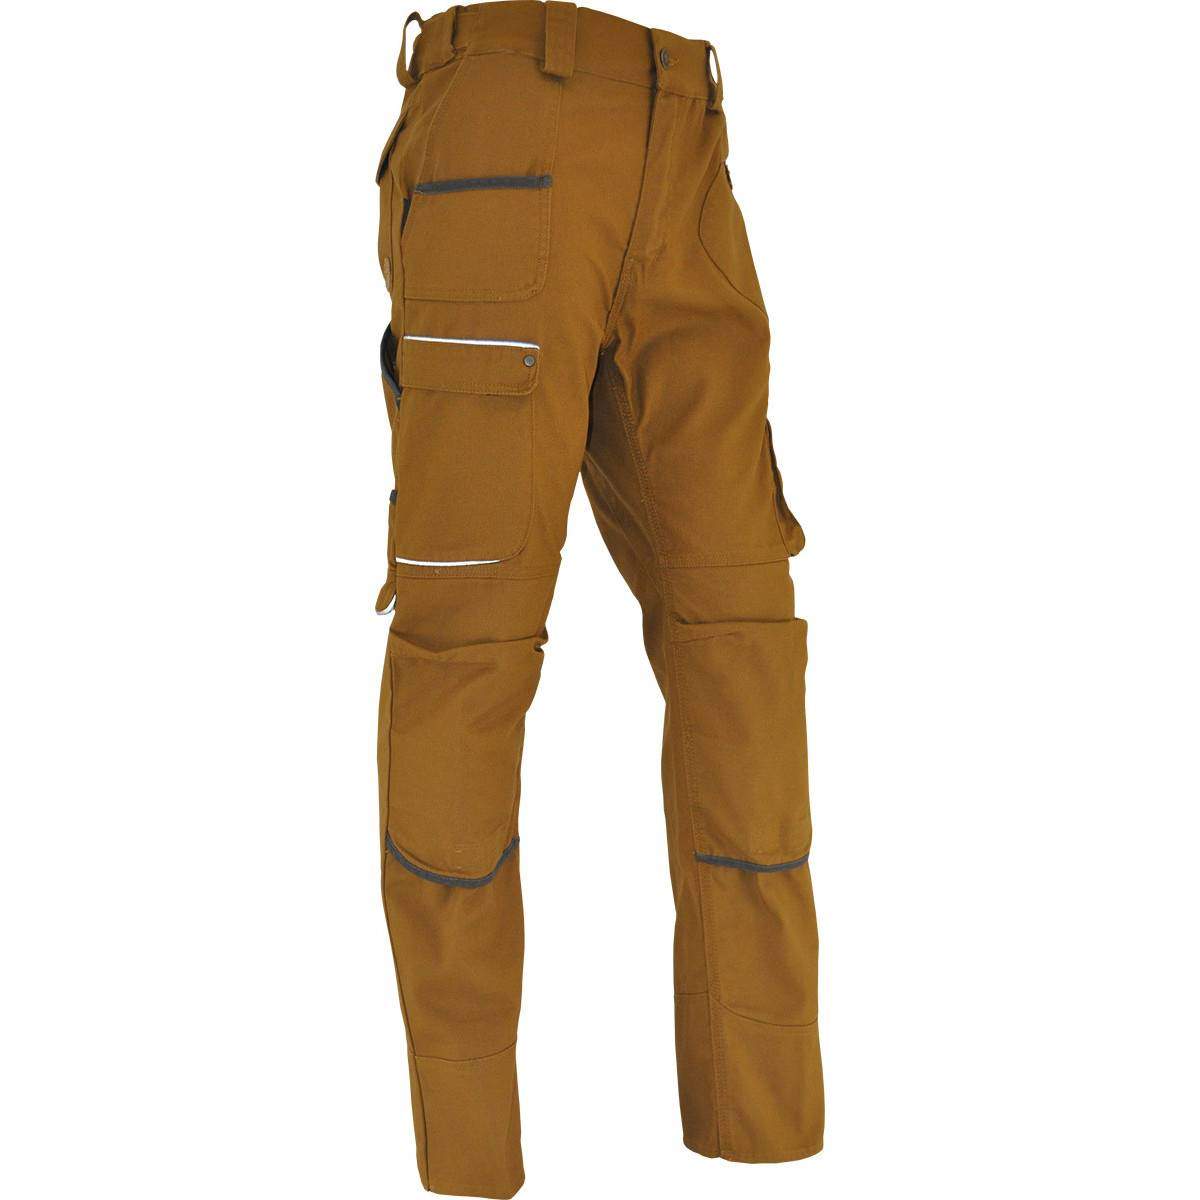 Pantalon chantier SAHARA Taille 40, poches multiples, genouillères incluses, bronze